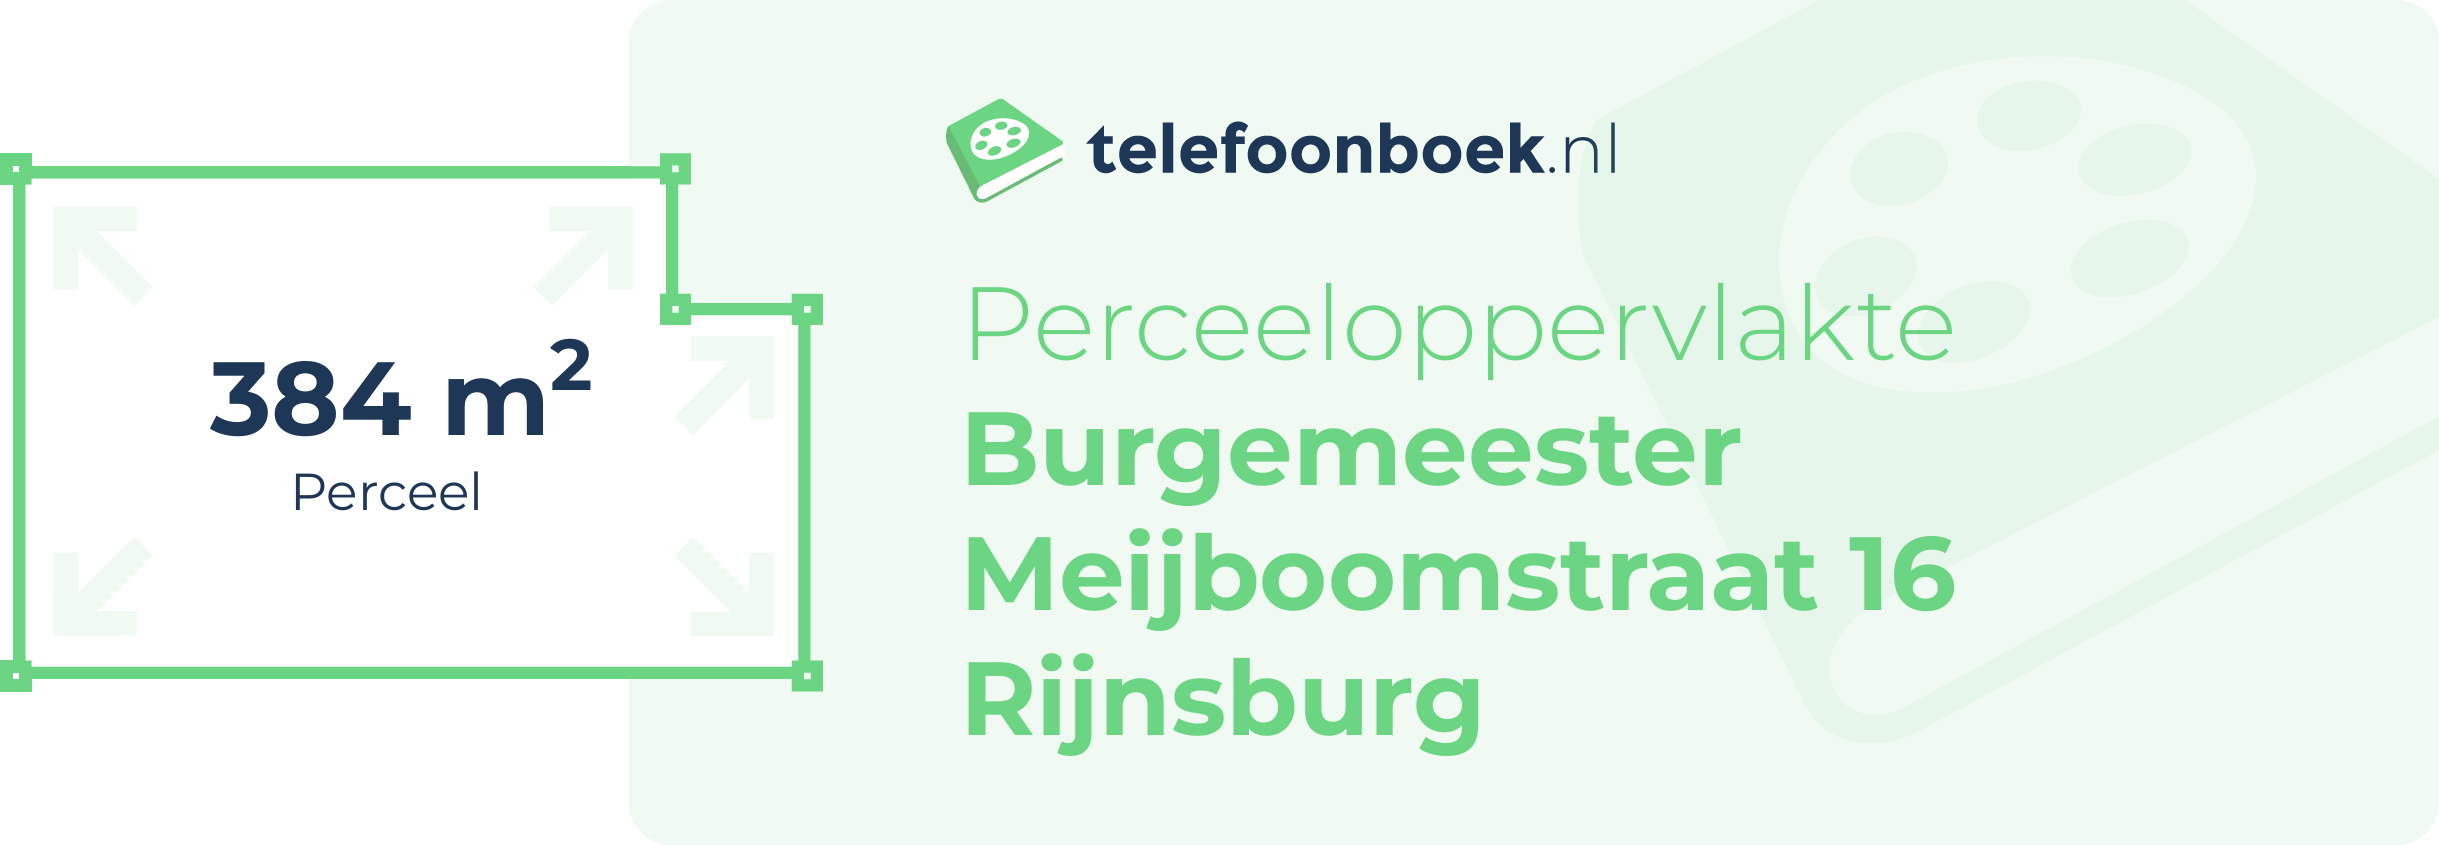 Perceeloppervlakte Burgemeester Meijboomstraat 16 Rijnsburg